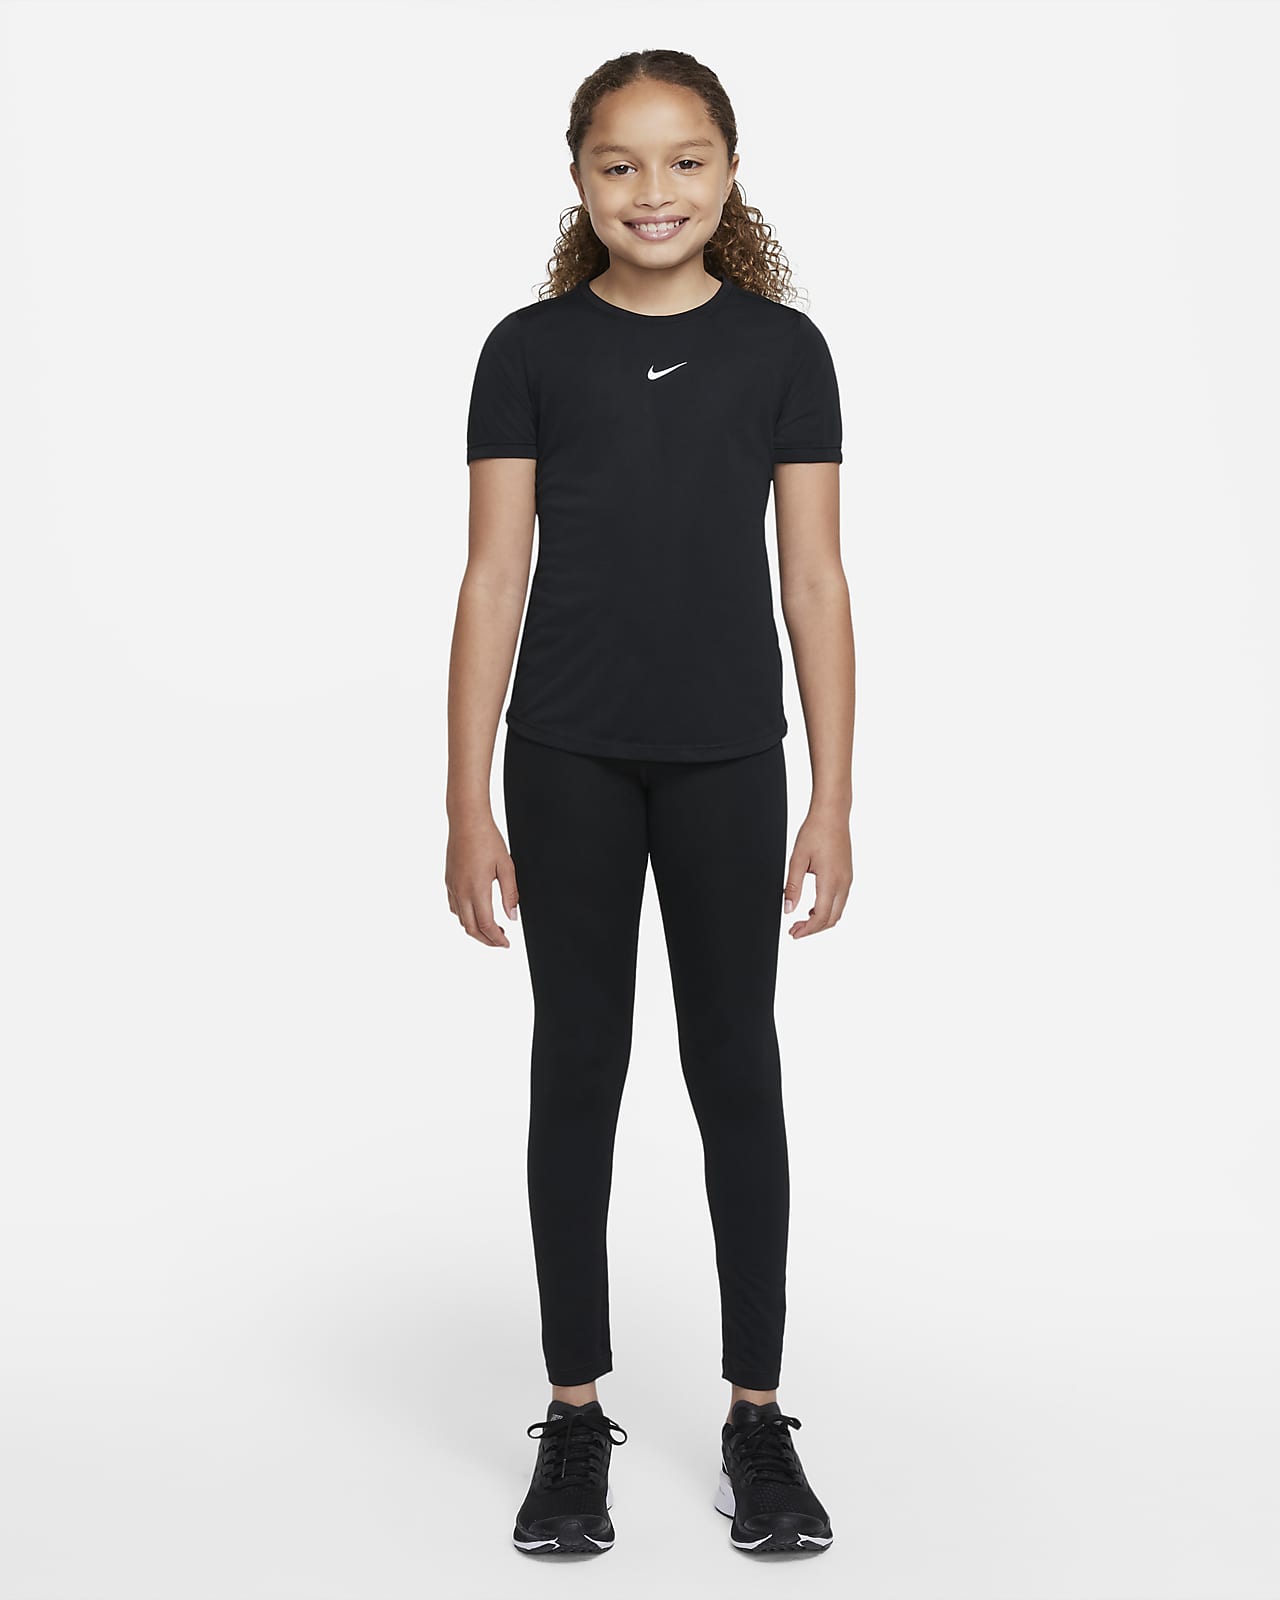 Nike One Big Kids\' (Girls\') Top. Short-Sleeve